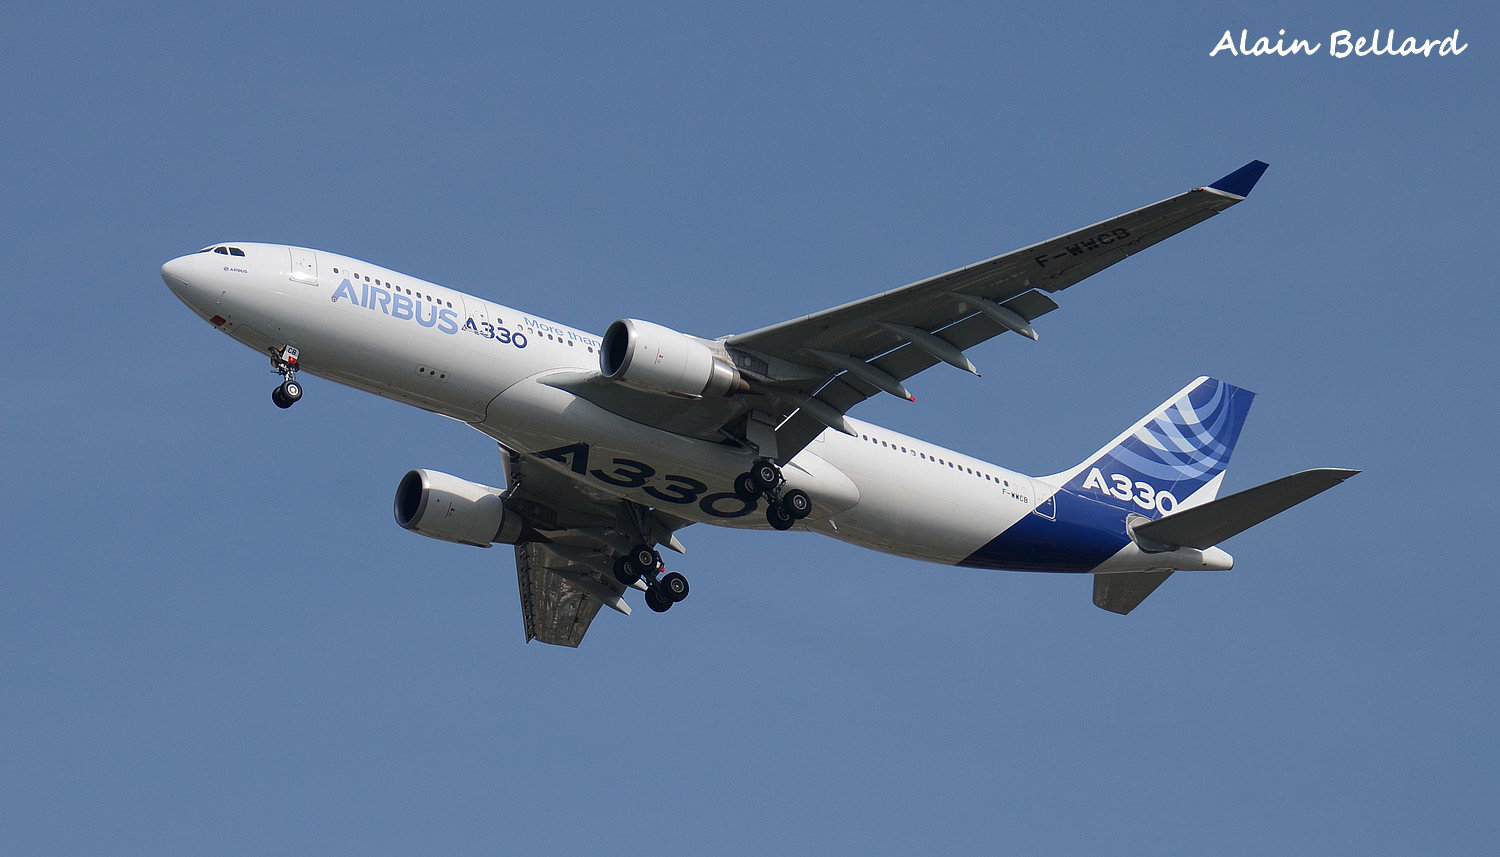 [23-04-2015] A330 F-WWCB AIB301 Whlz